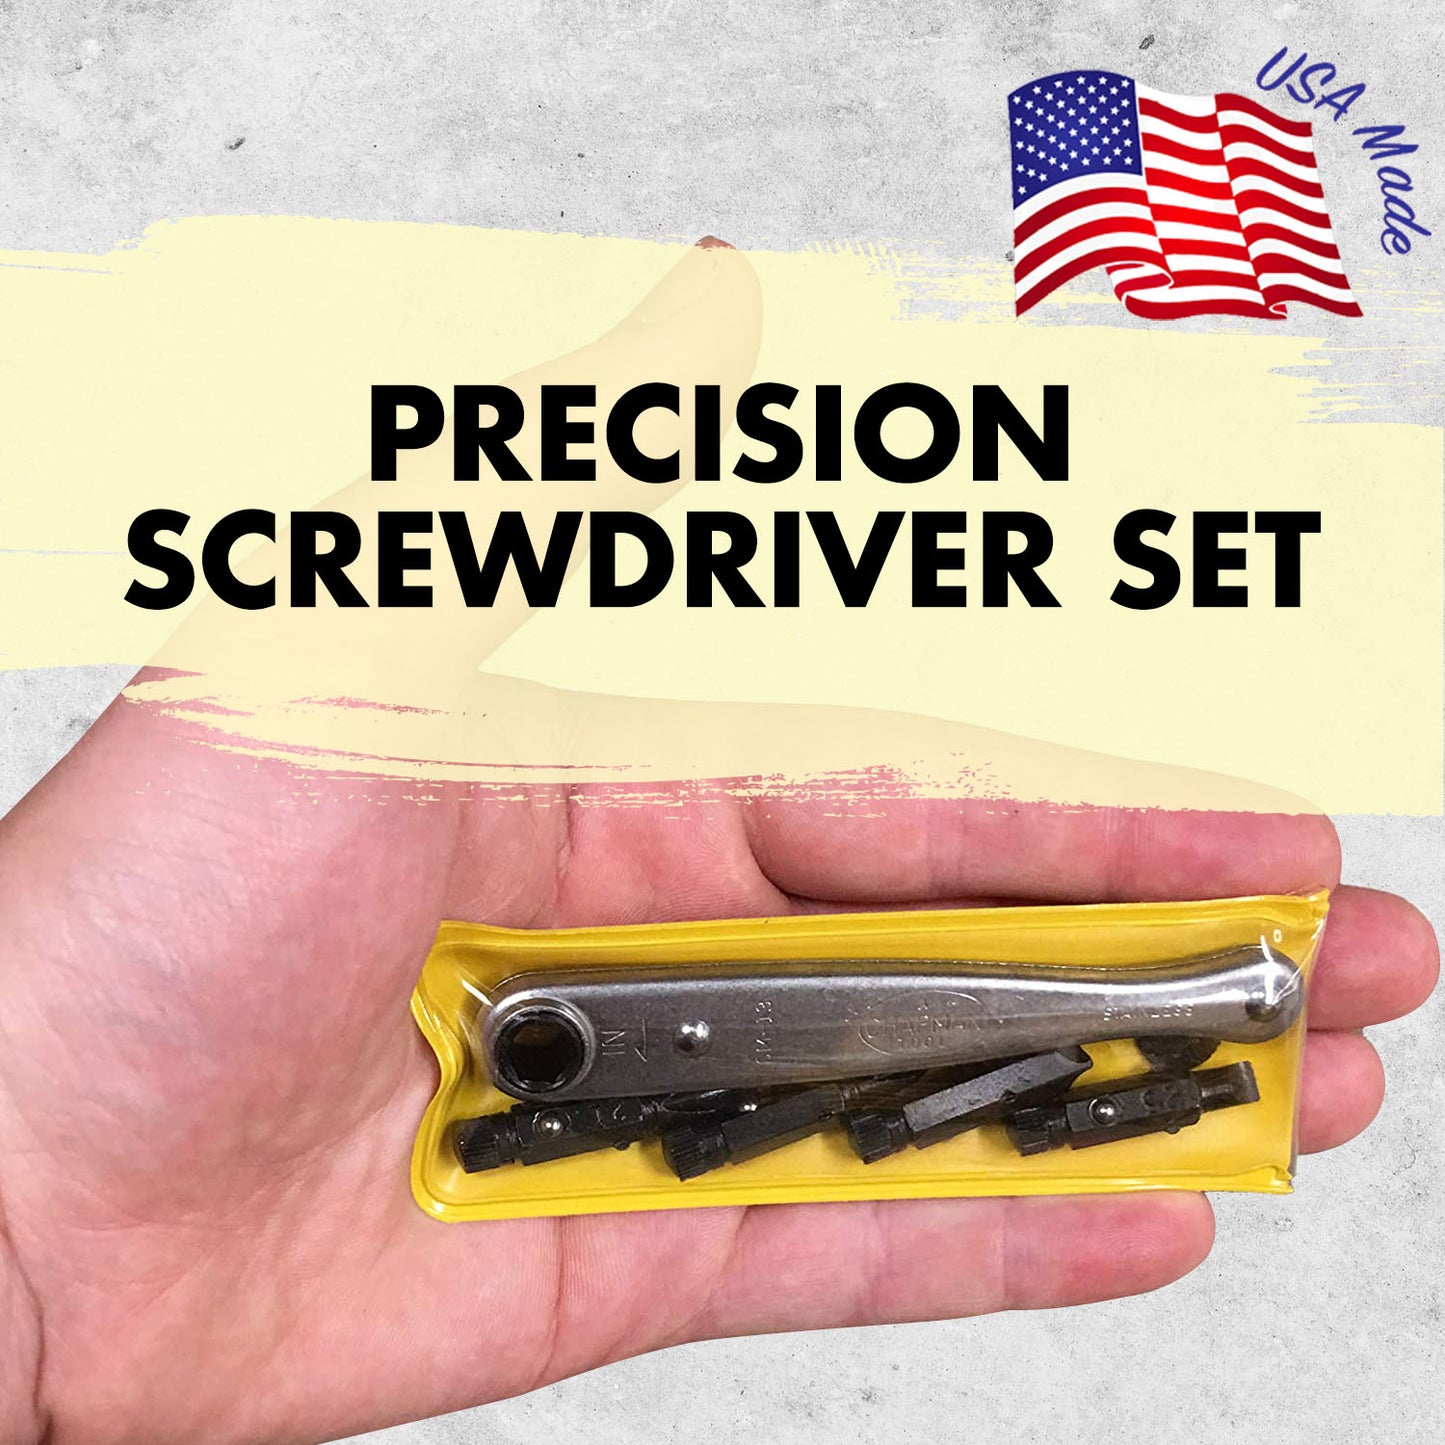 Precision Screwdriver Set | Chapman MFG